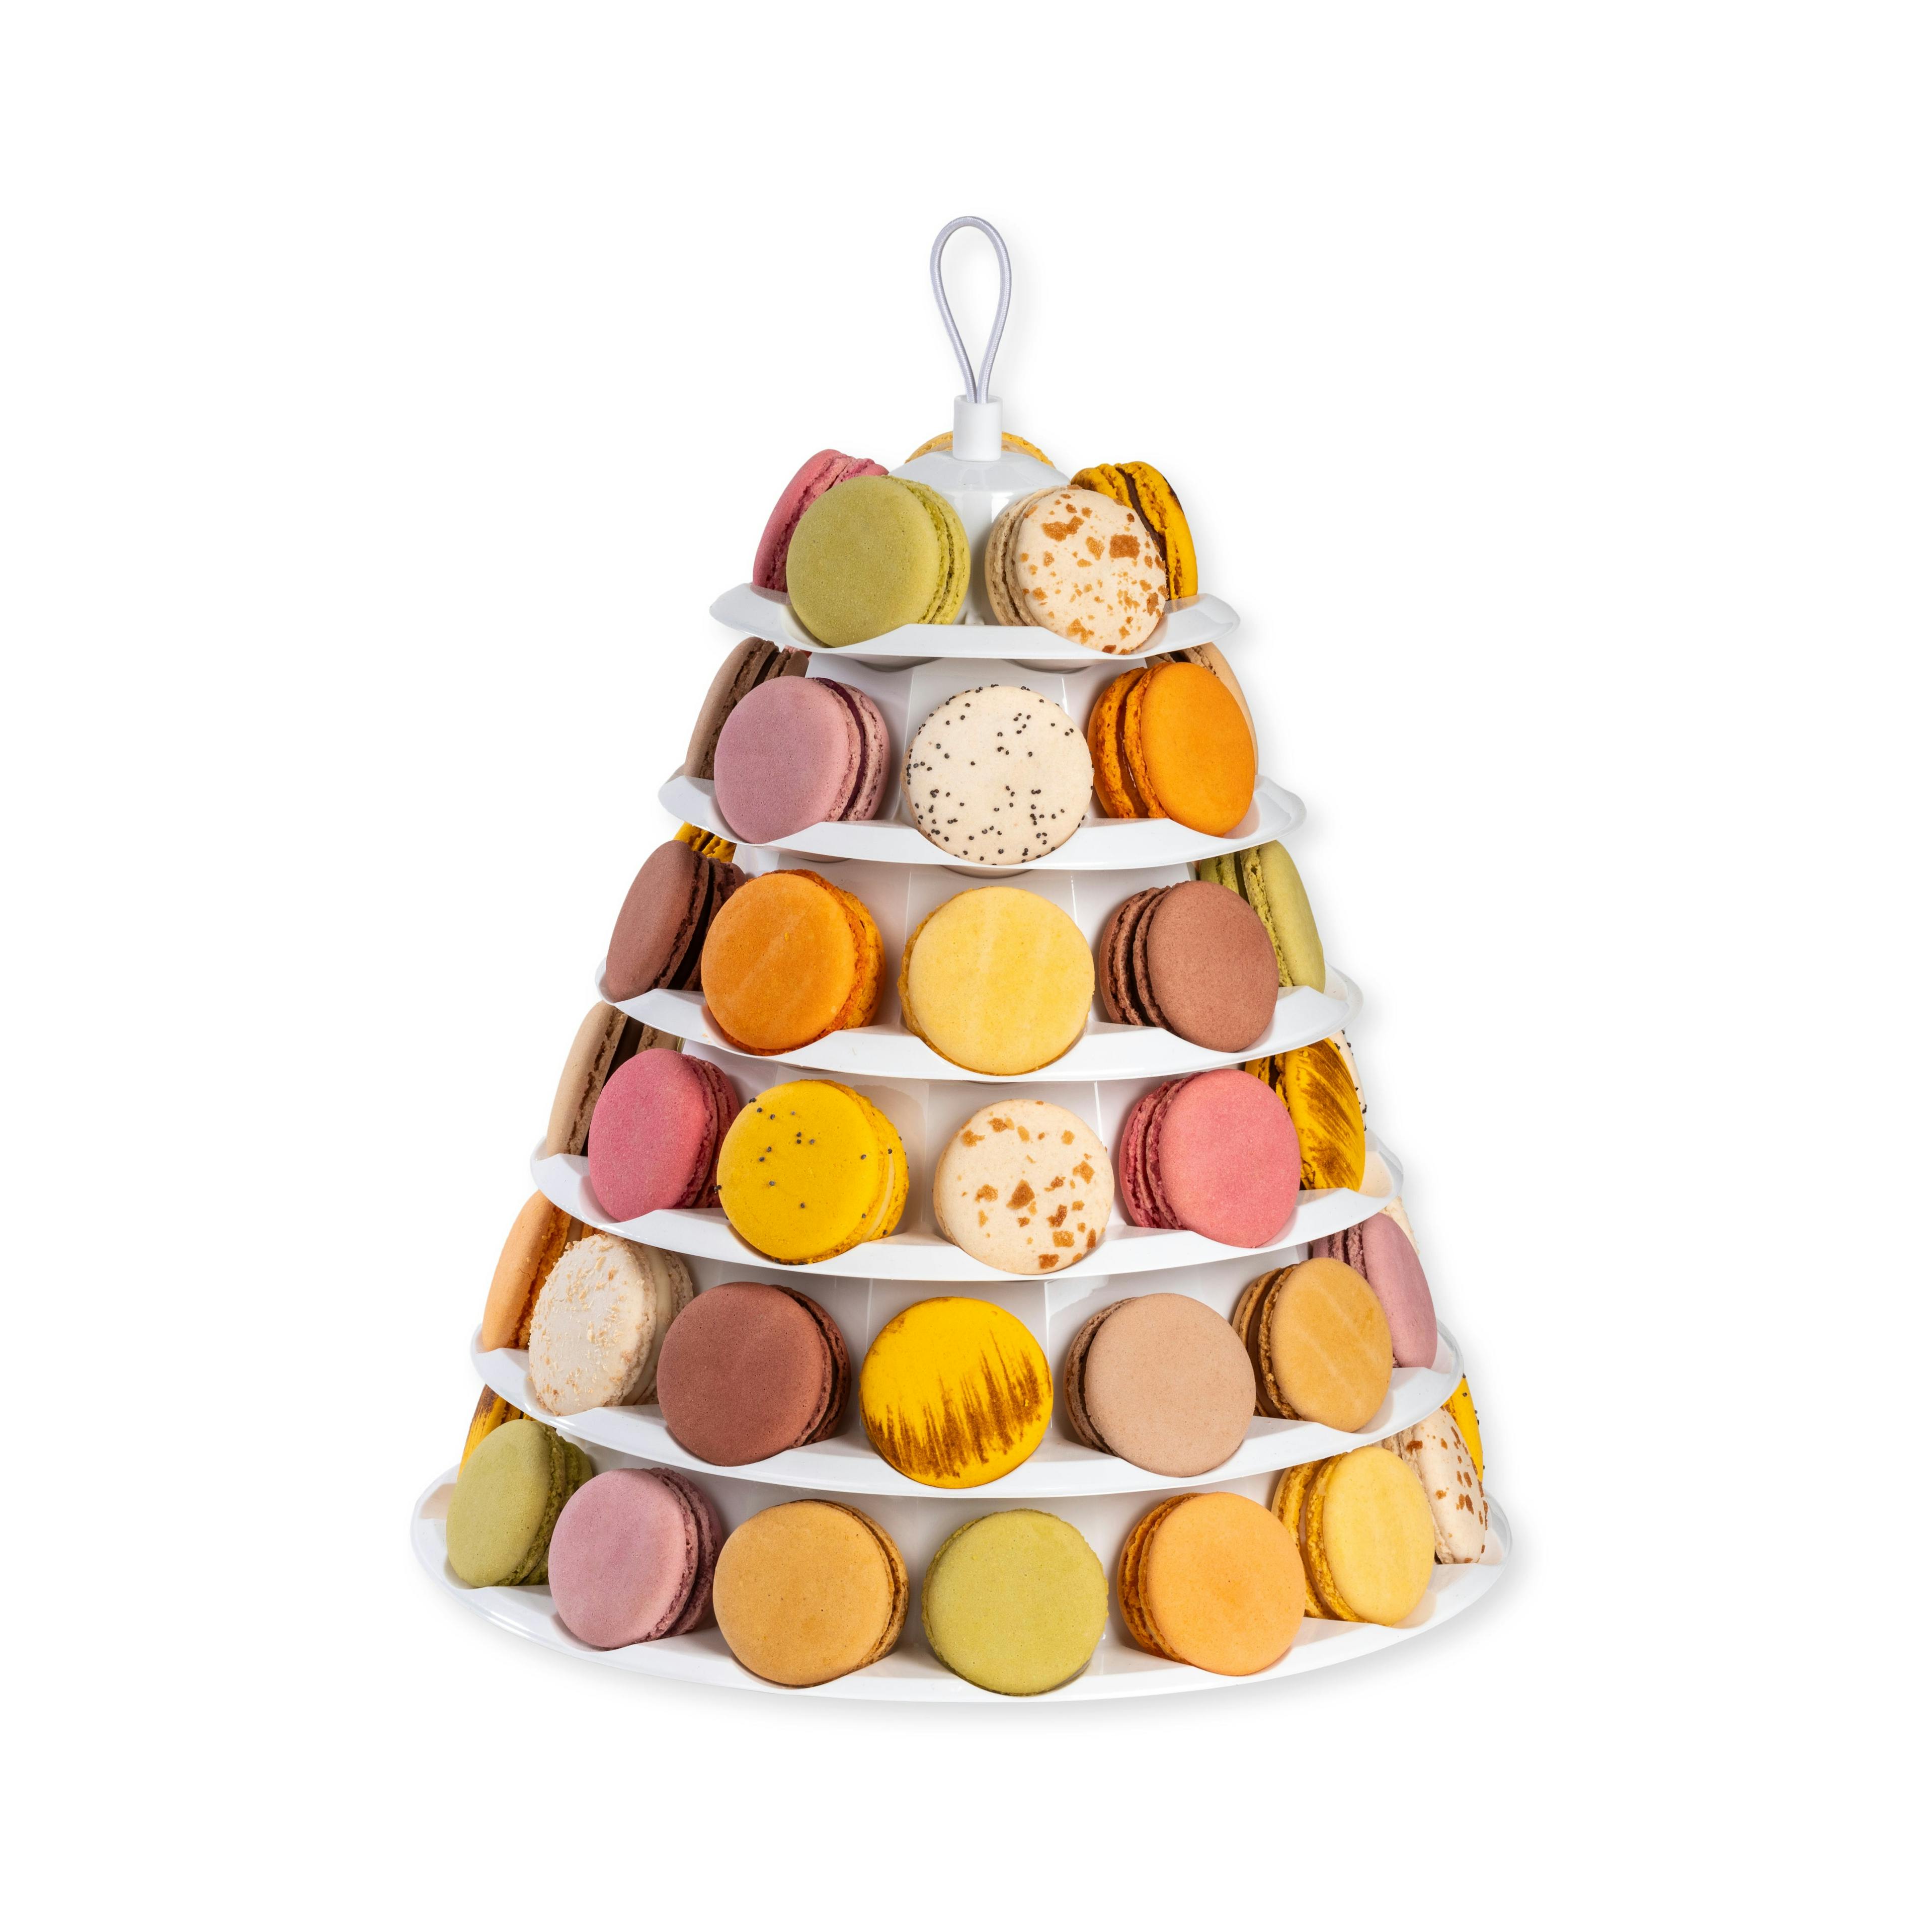 Pyramide 60 macarons - Vincent Vallée world champion chocolatier